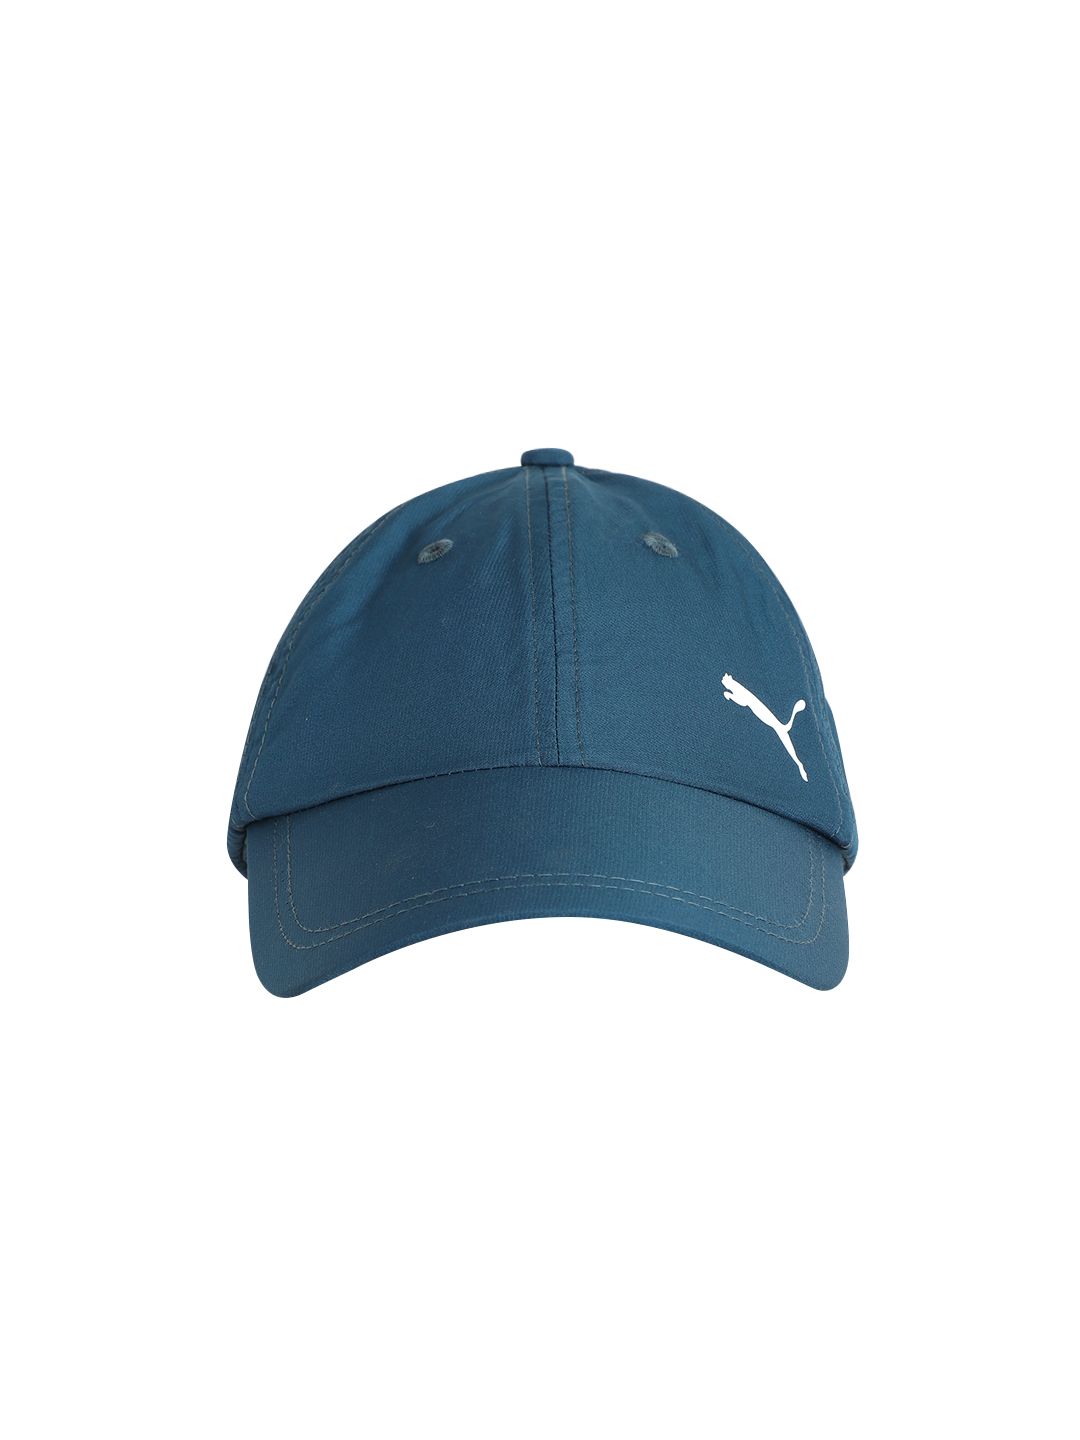 Puma Unisex Teal Blue Brand Logo Detail TR Core Cap Price in India